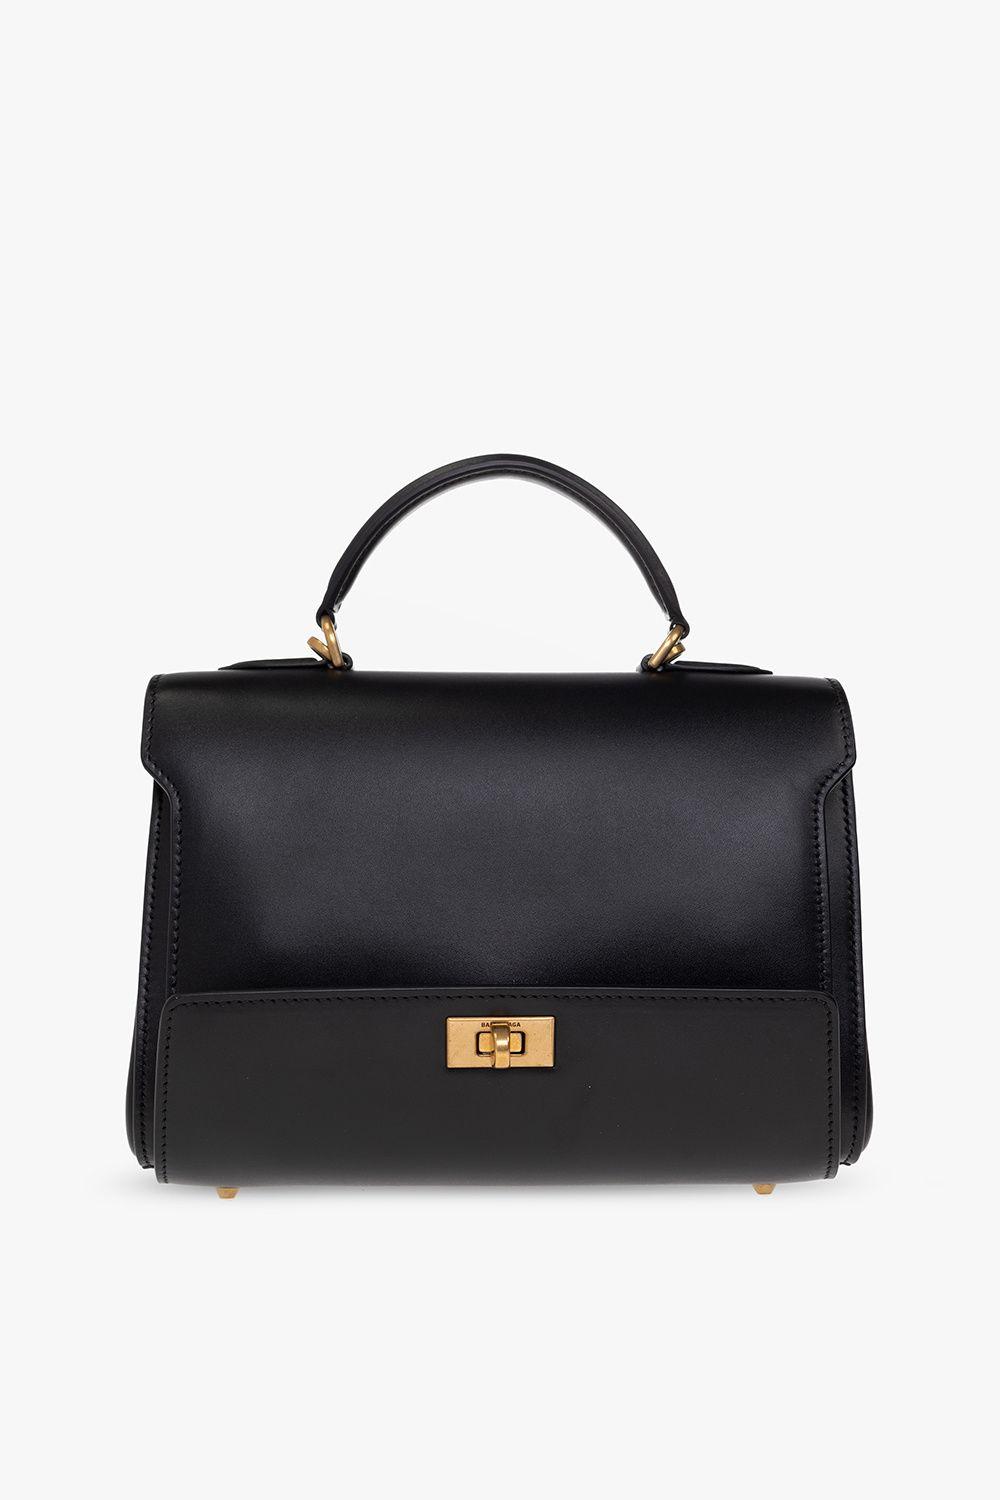 Balenciaga 'money Small' Shoulder Bag in Black | Lyst